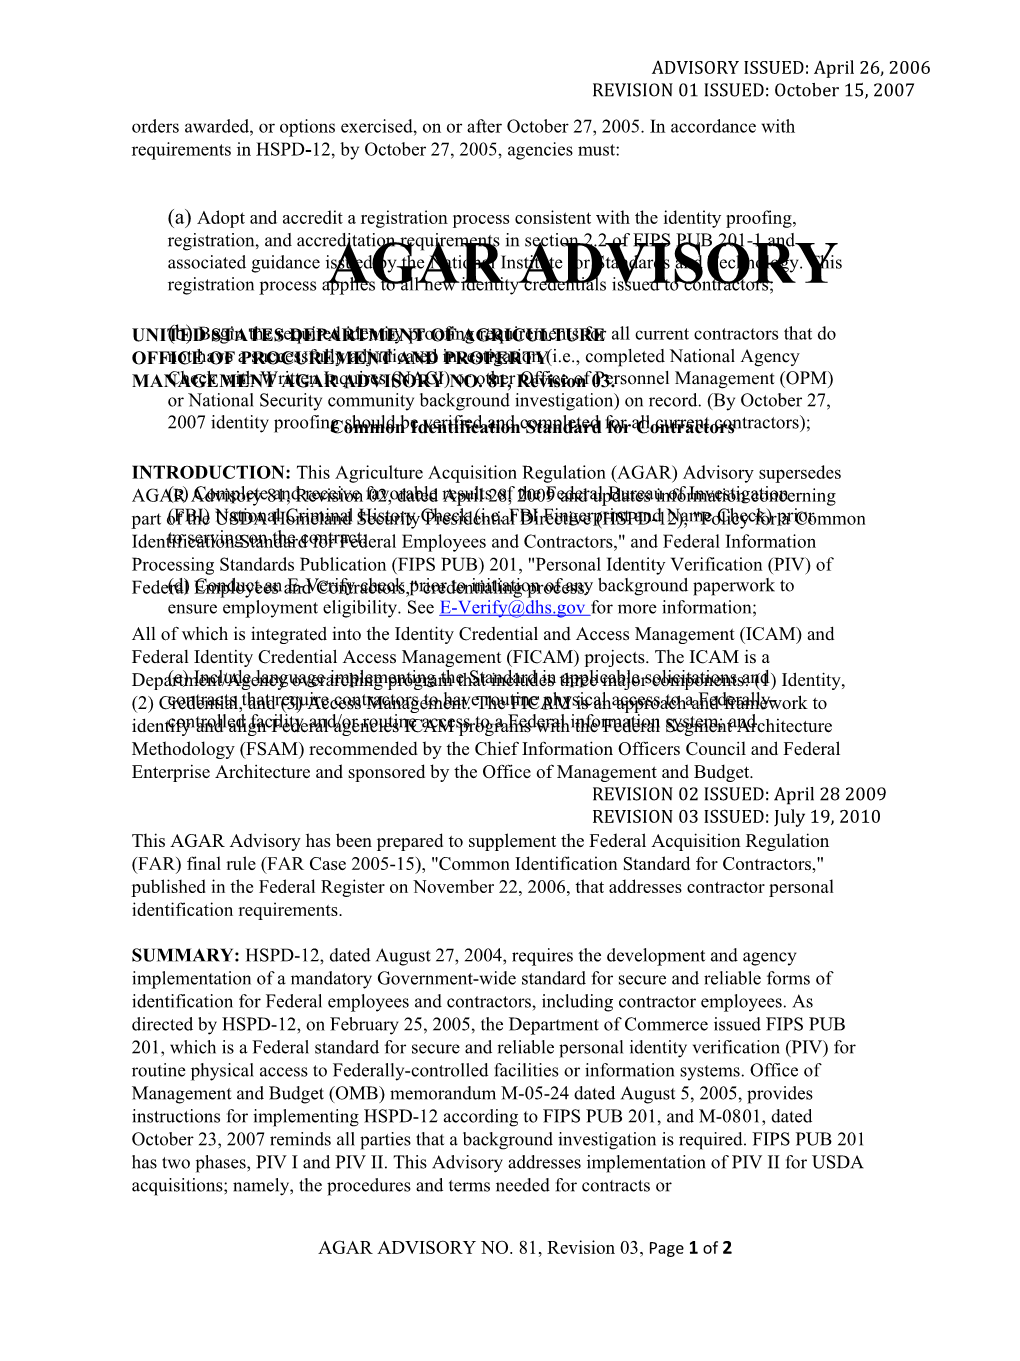 AGAR 81 Procurement Vetted July 12 2010